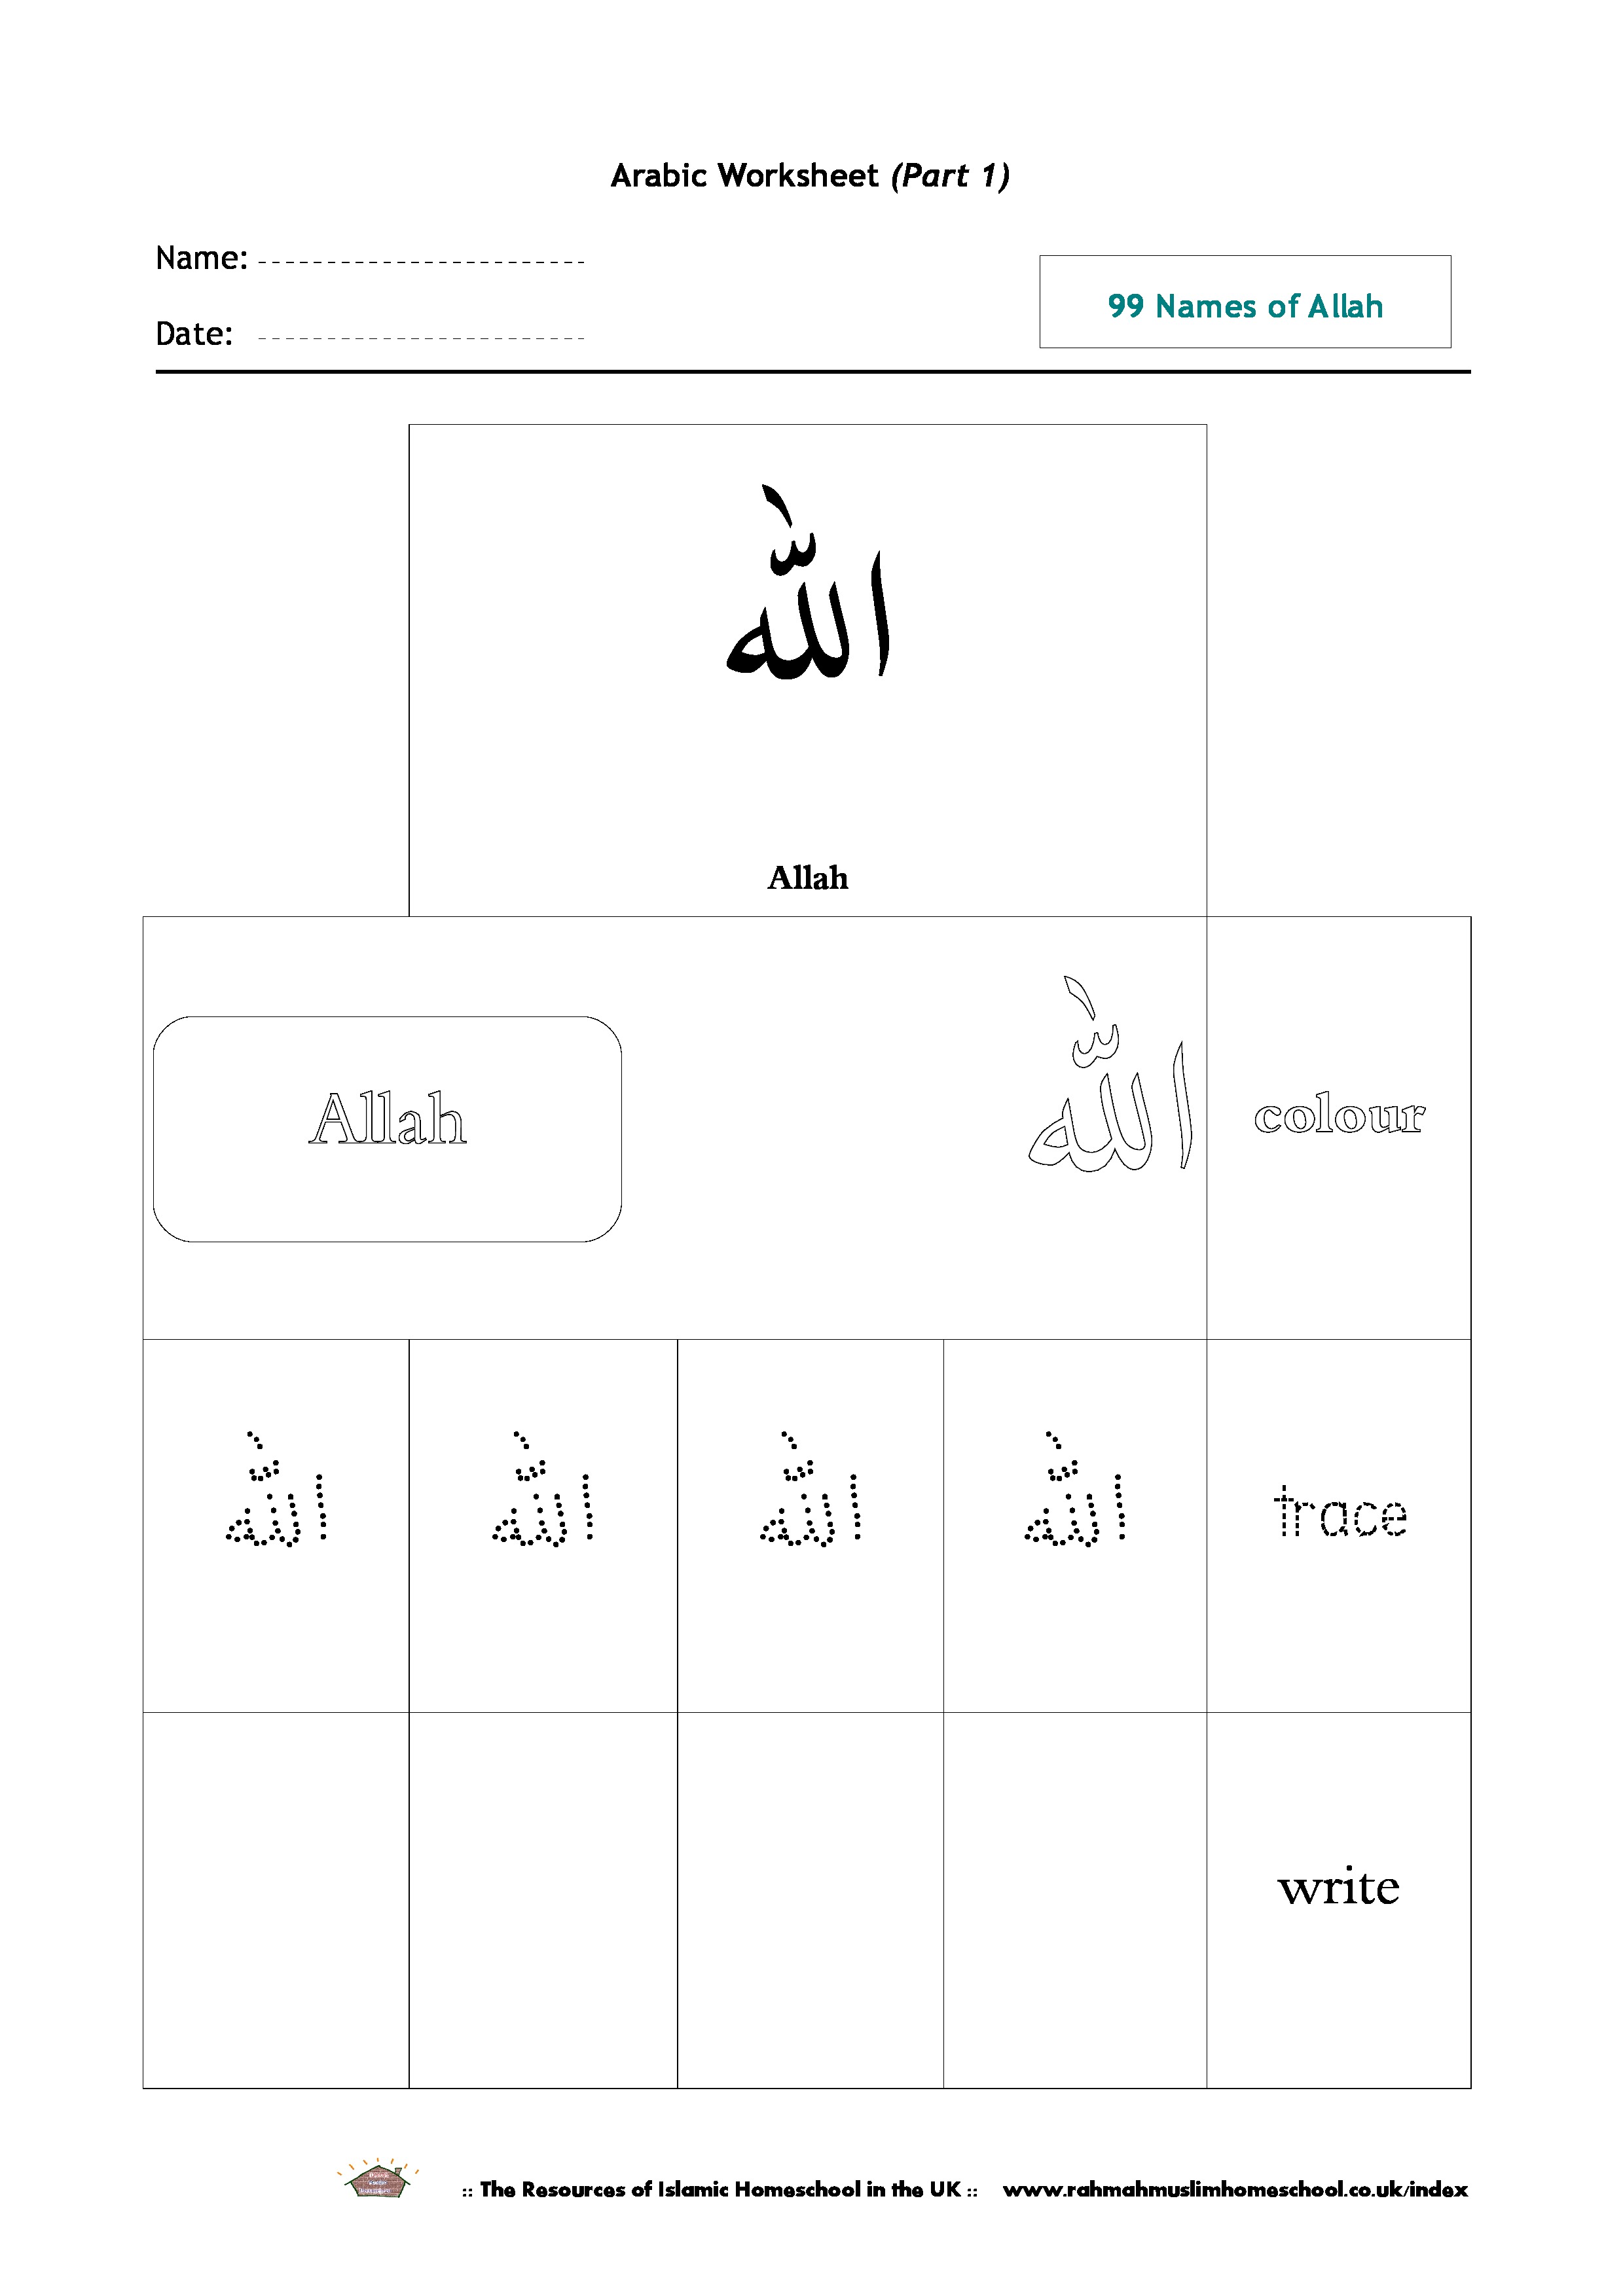 Allah 99 Names of Worksheets for Kids